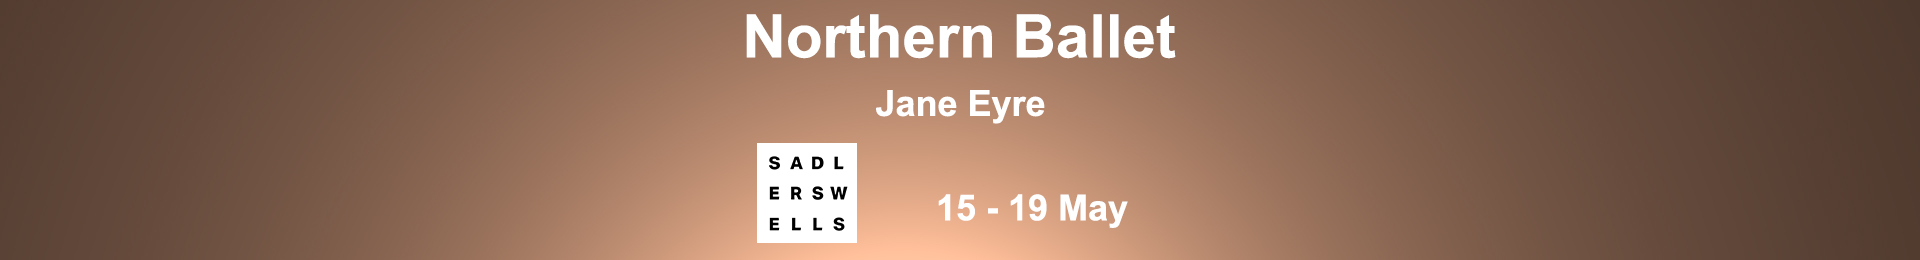 Northern Ballet: Jane Eyre banner image